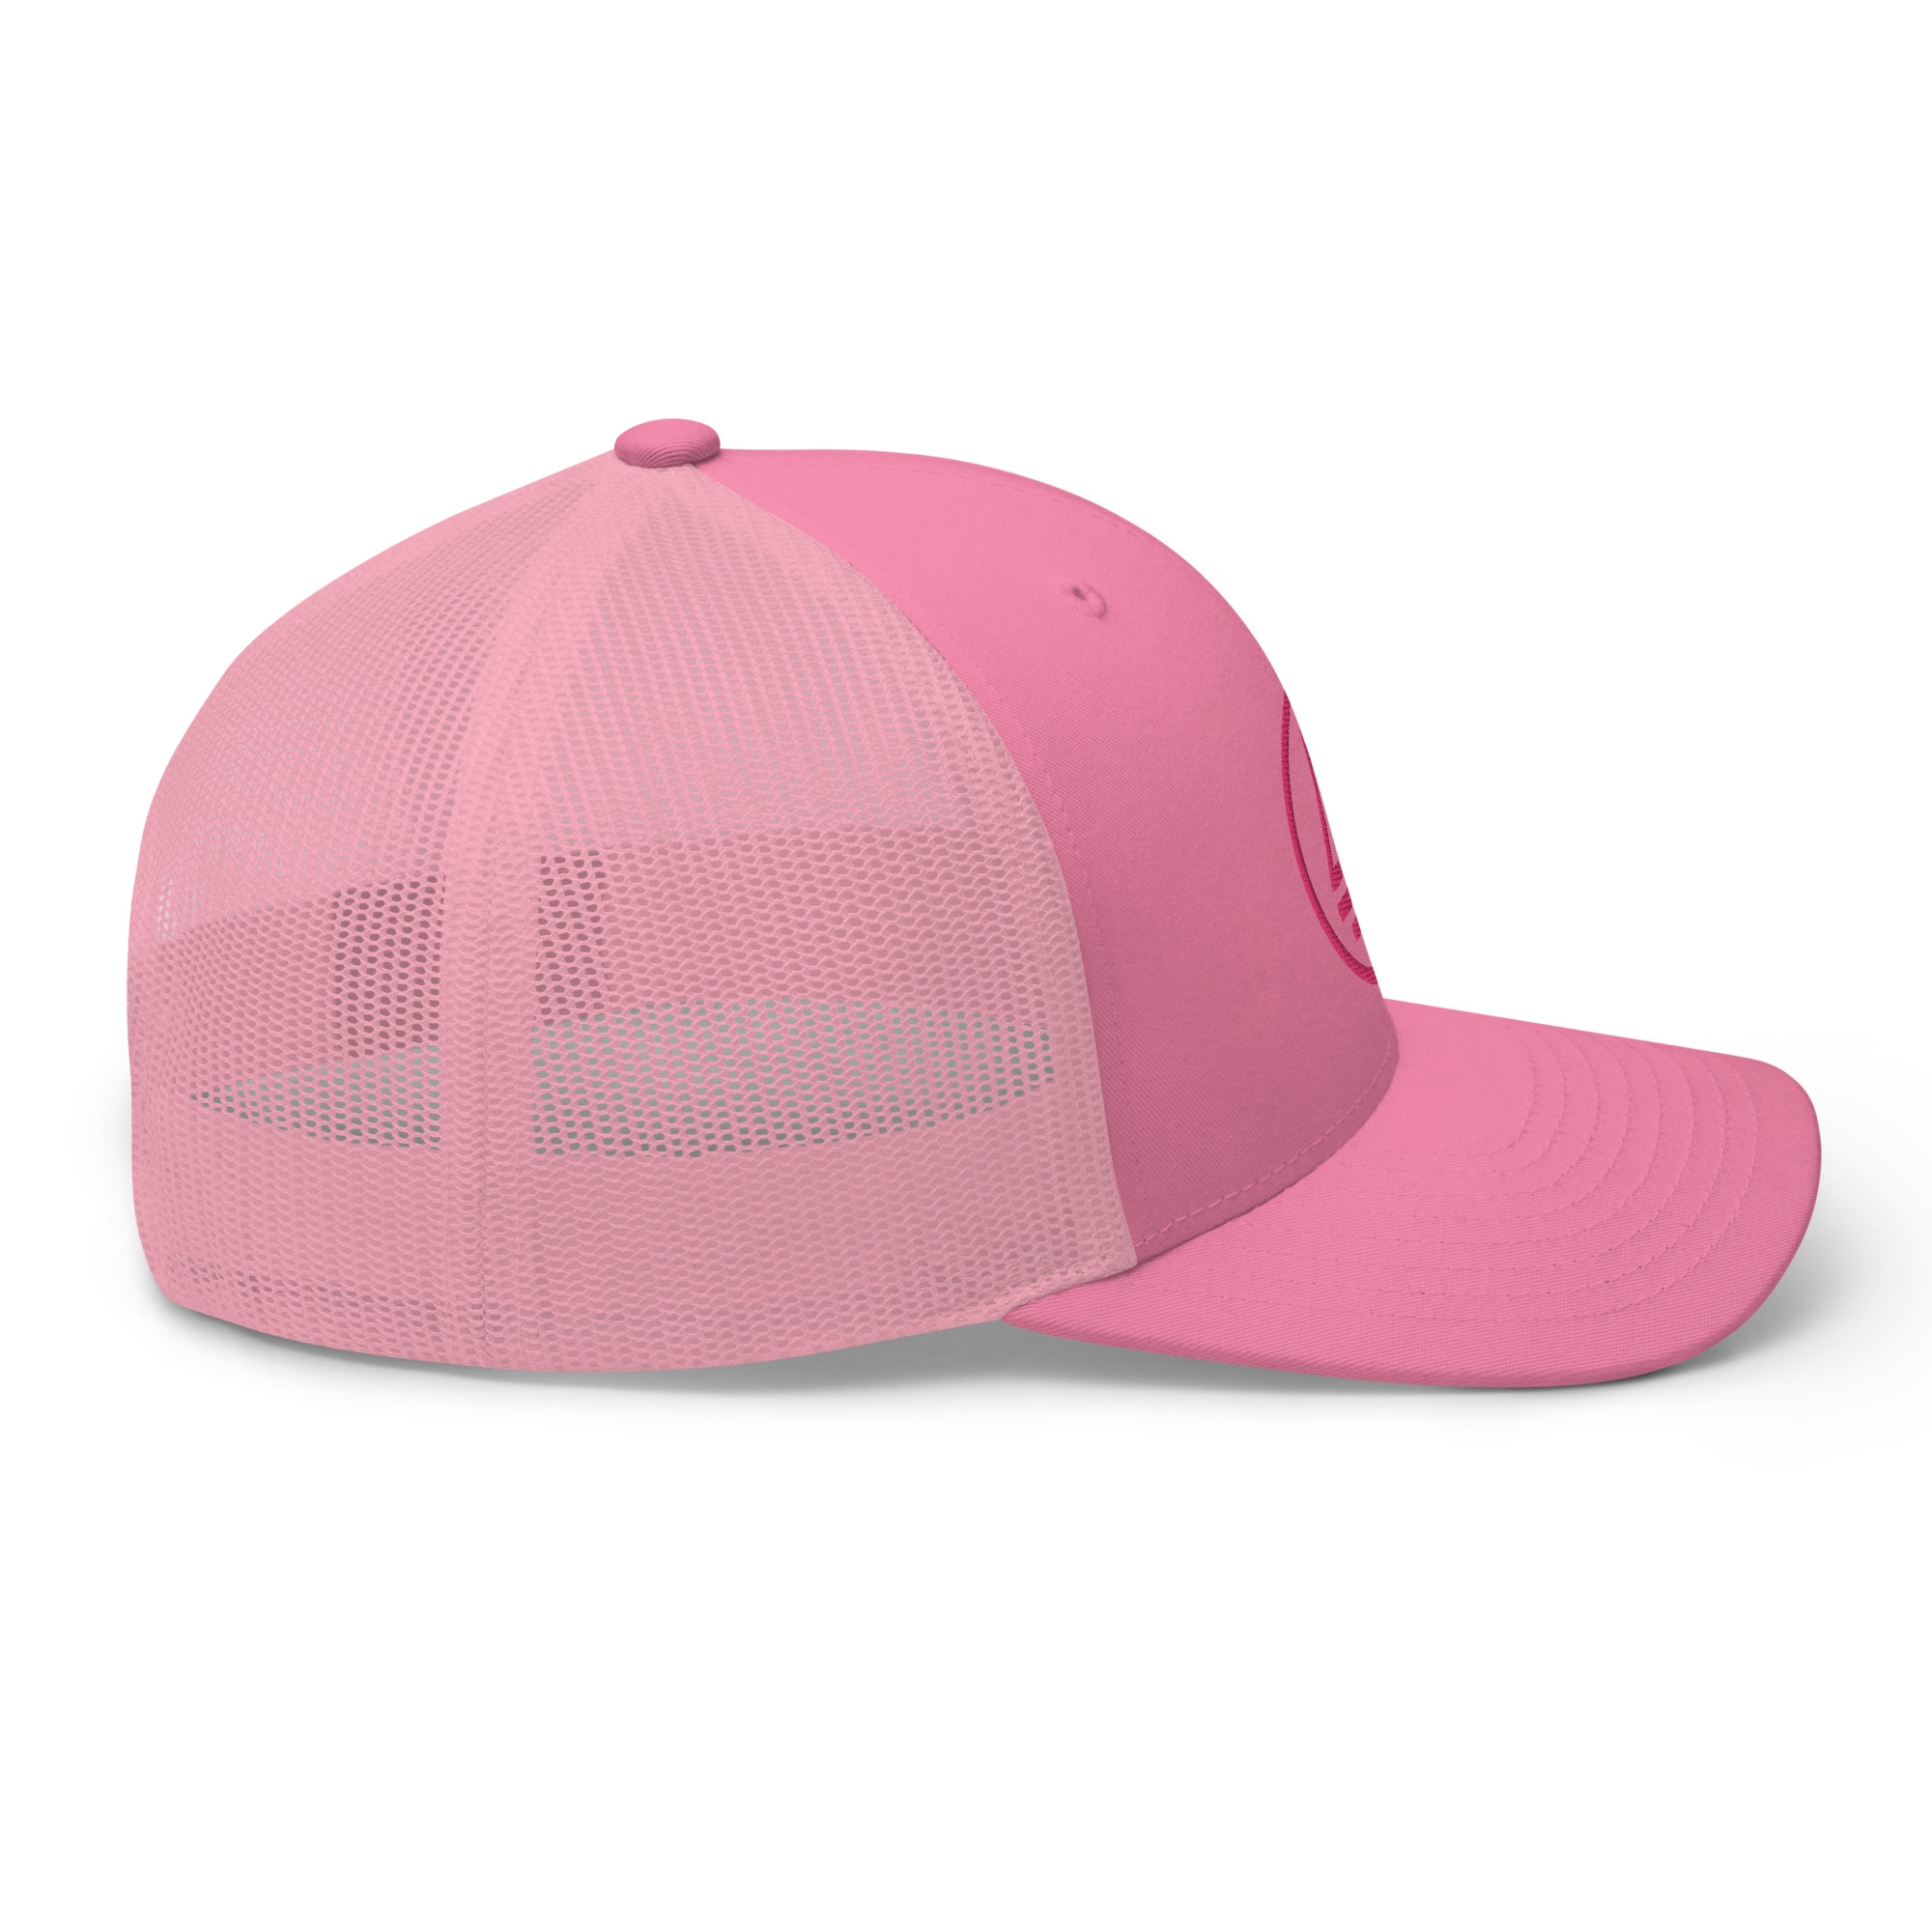 retro-trucker-hat-pink-right-64c9ab01701b5.jpg